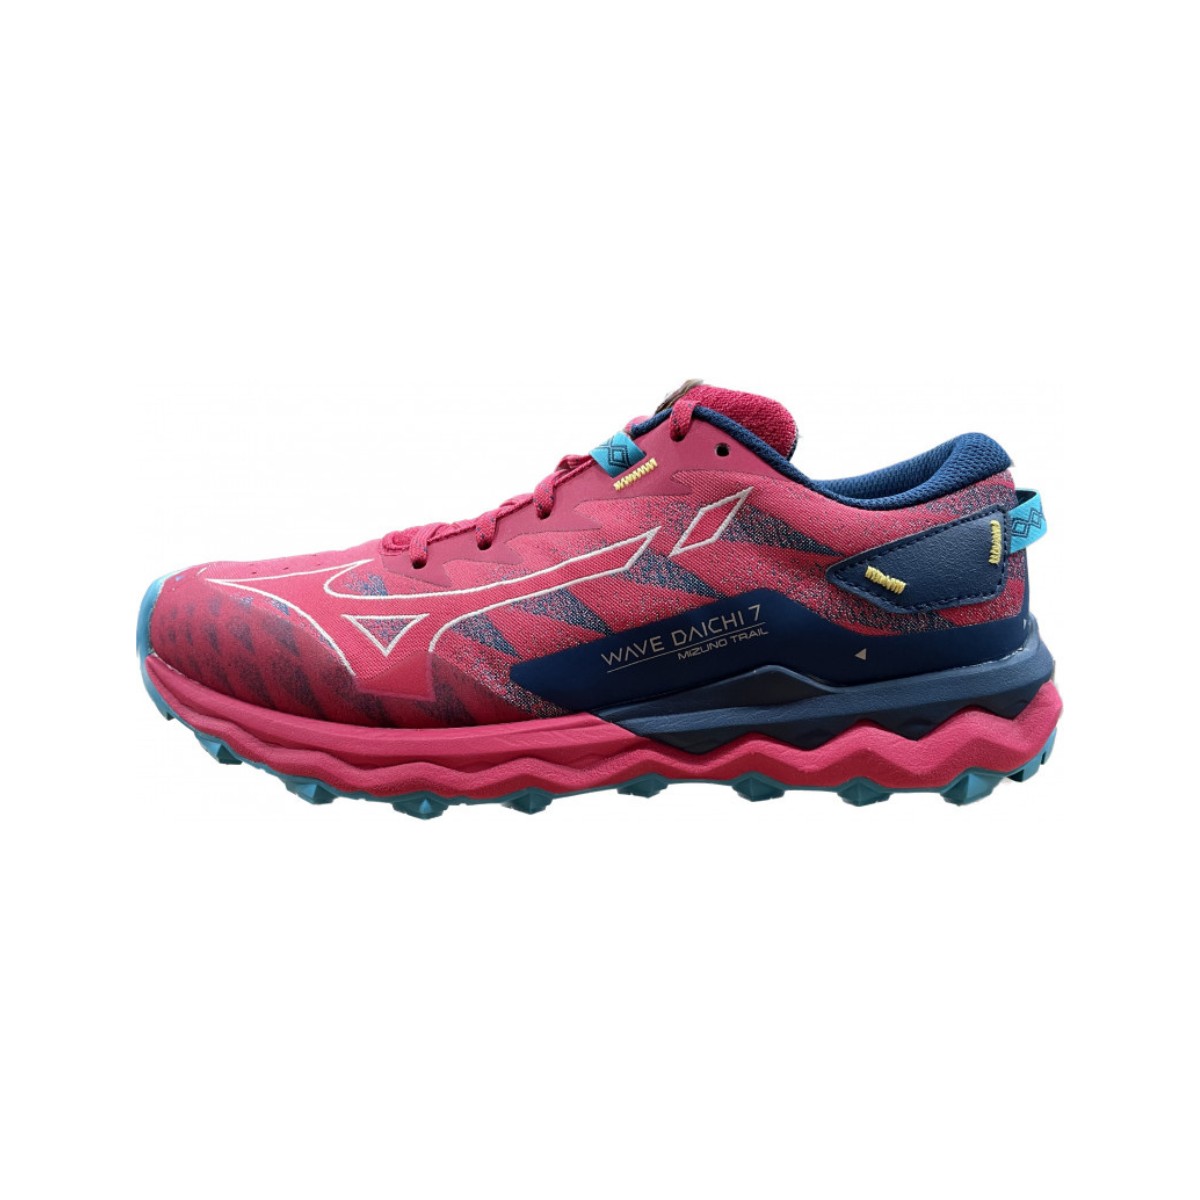 Mizuno Wave Daichi 7 Rote Himmelblau Schuhe AW23 Damen, Größe 38 - EUR